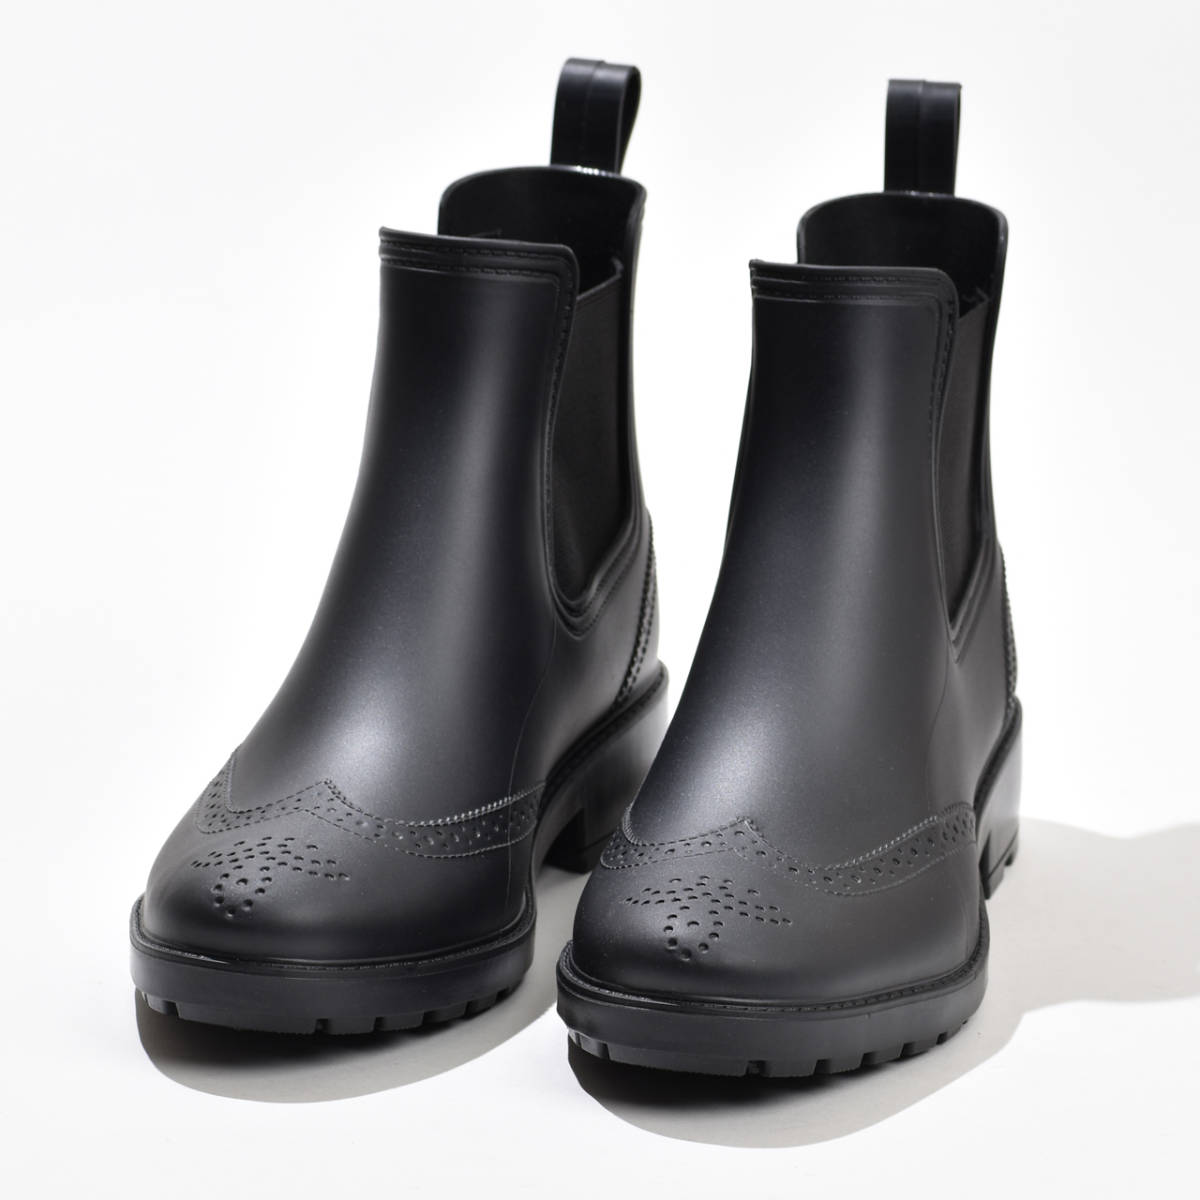  rain boots boots business shoes casual men's waterproof rain for black M size 